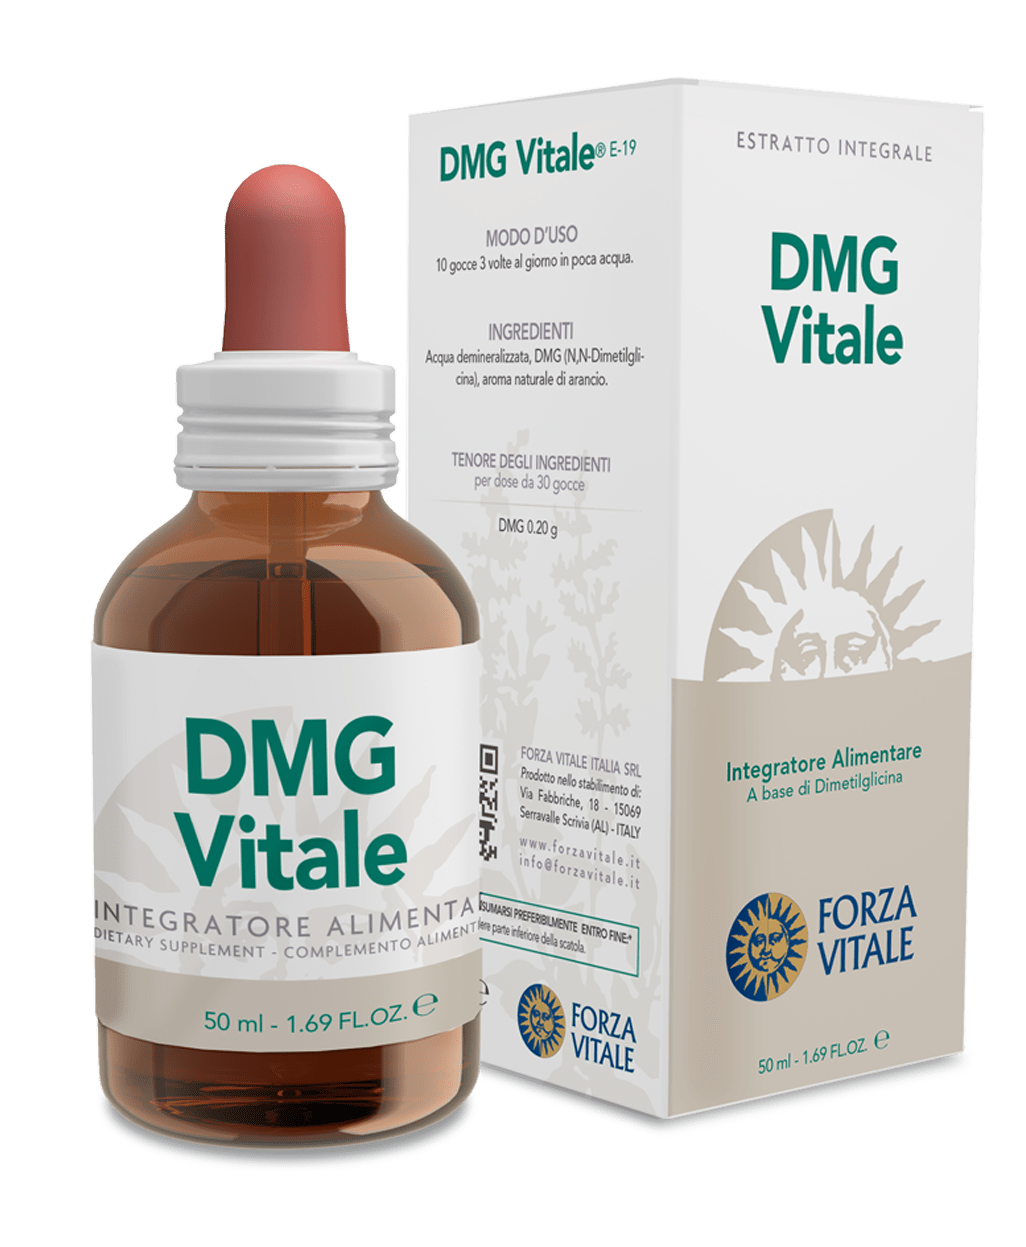 Autismo Cura Naturale - DMG Vitale E-19 N-Dimetilglicina